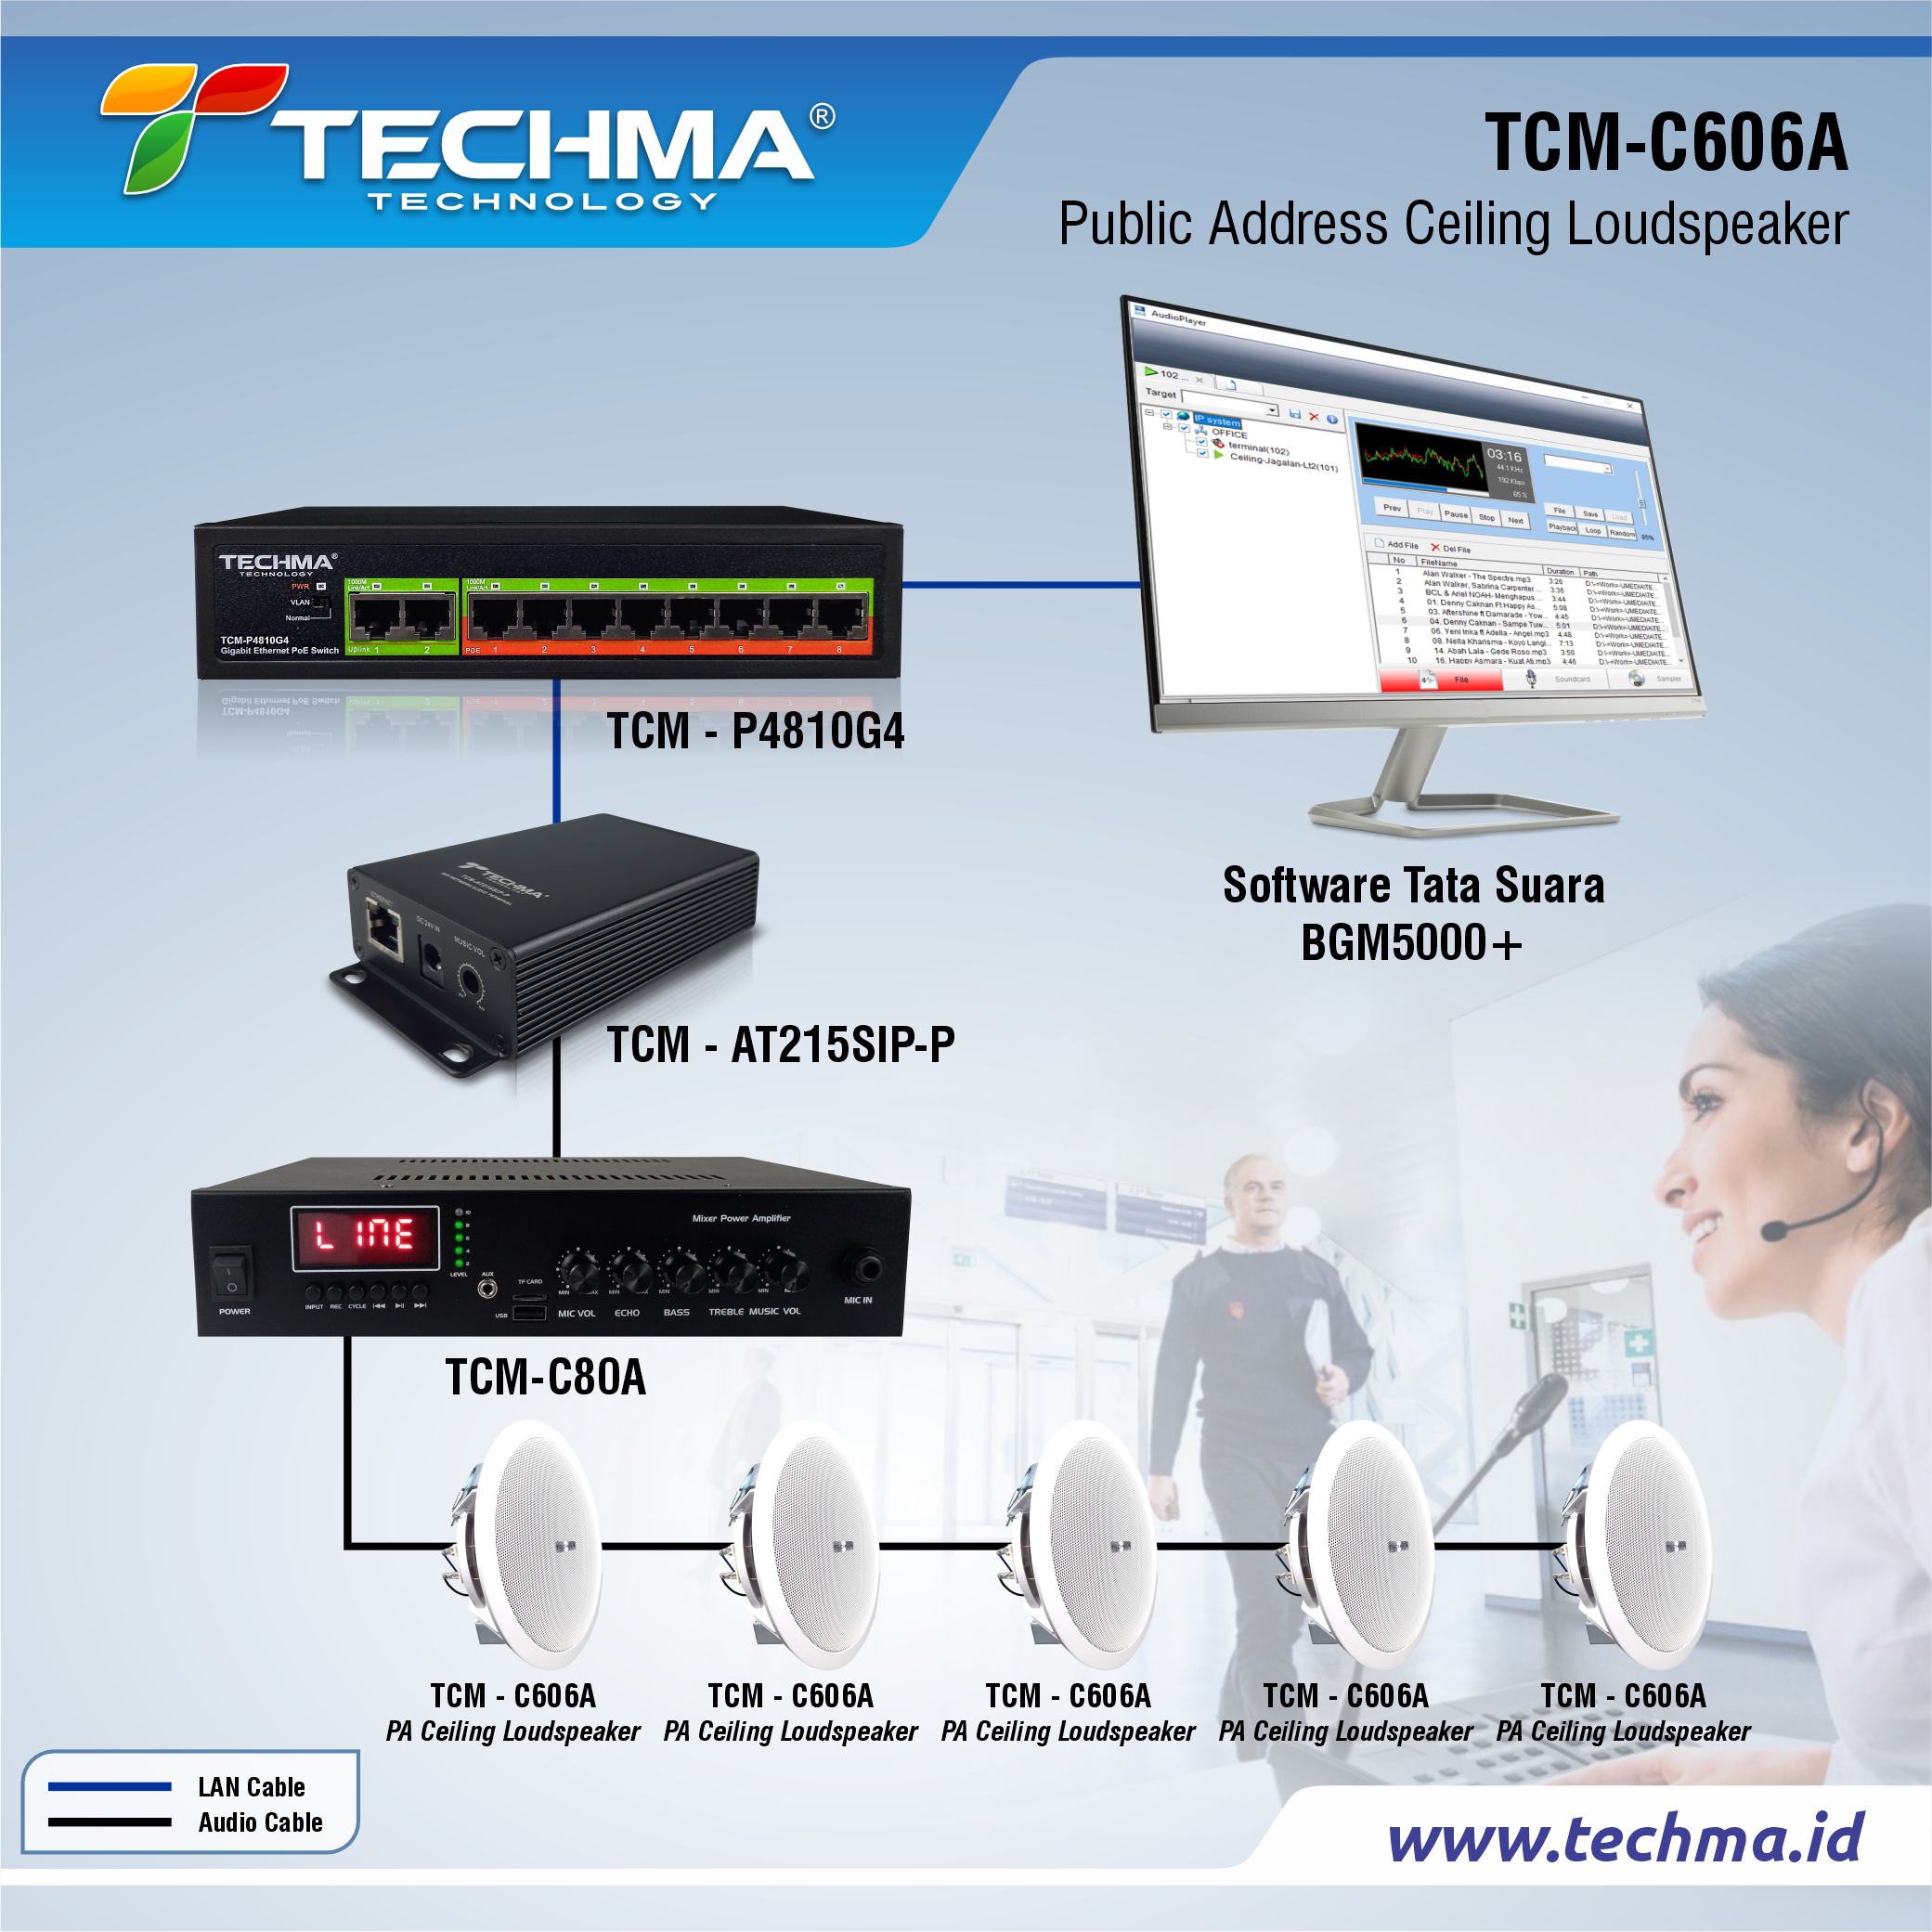 TCM-C606A web 3